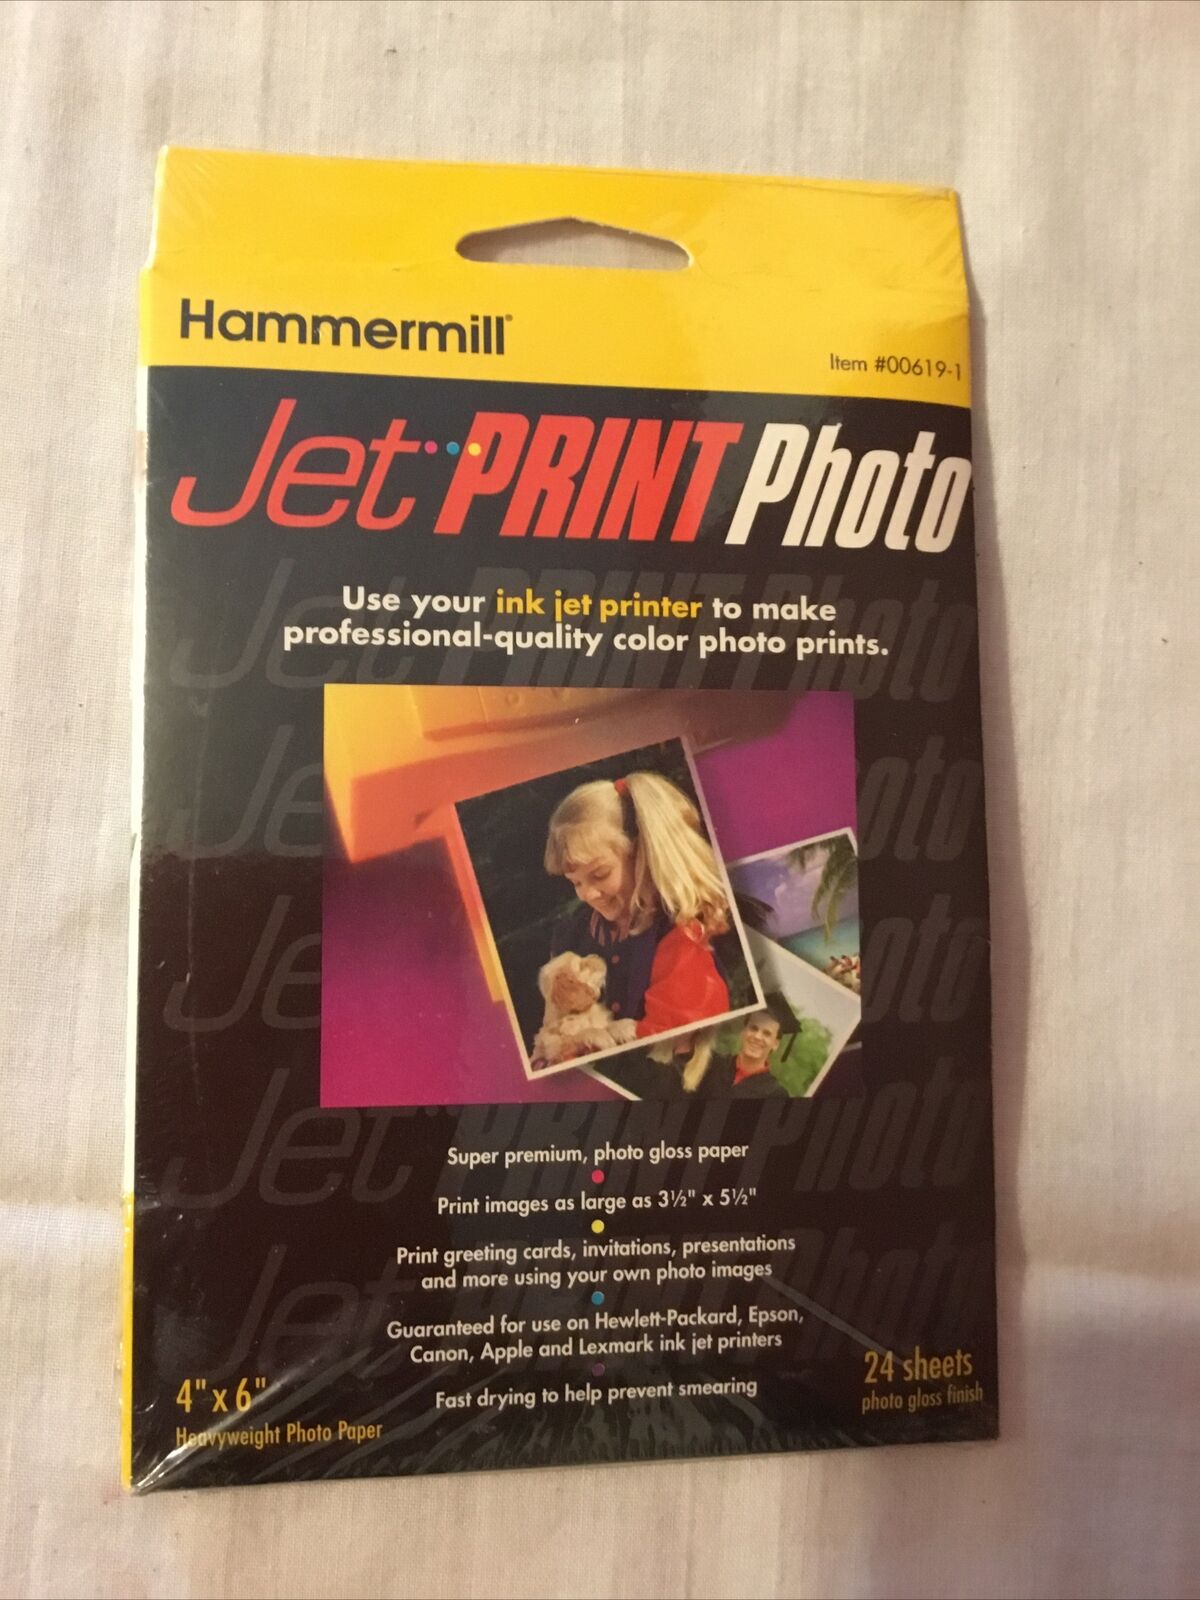 Hammermill #00619-1 Jet Print Photo 4x6 Gloss 24 Sheets